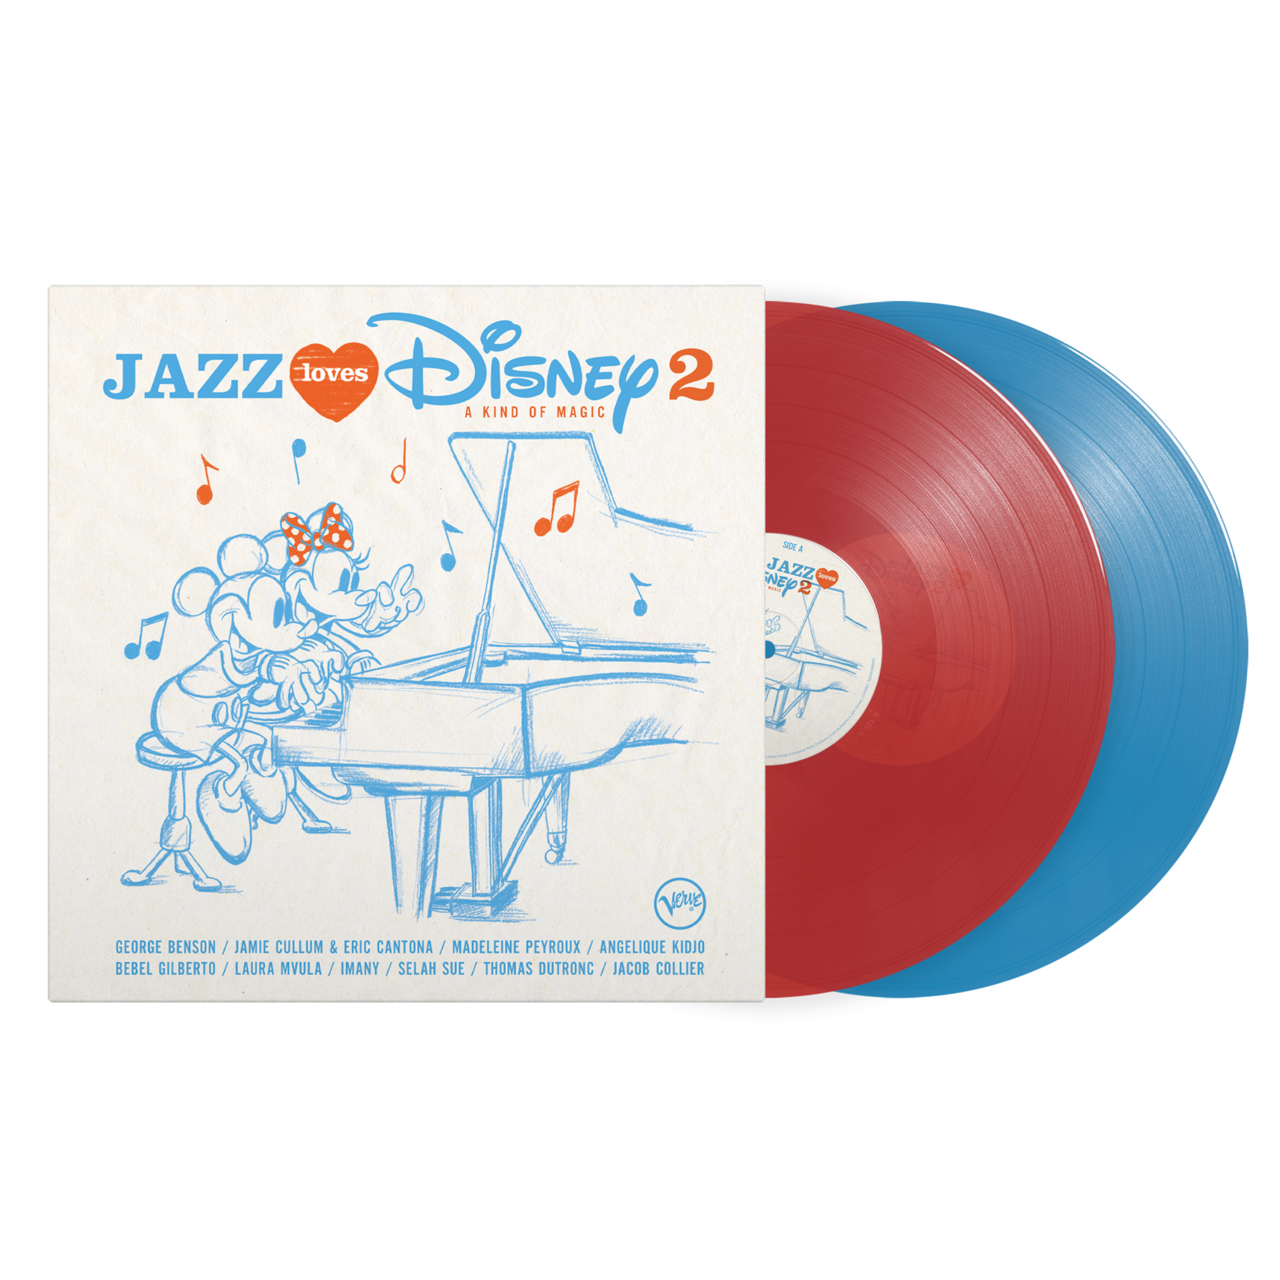 Various Artists - Jazz Loves Disney 2 - A Kind Of Magic: Red & Blue Vinyl LP